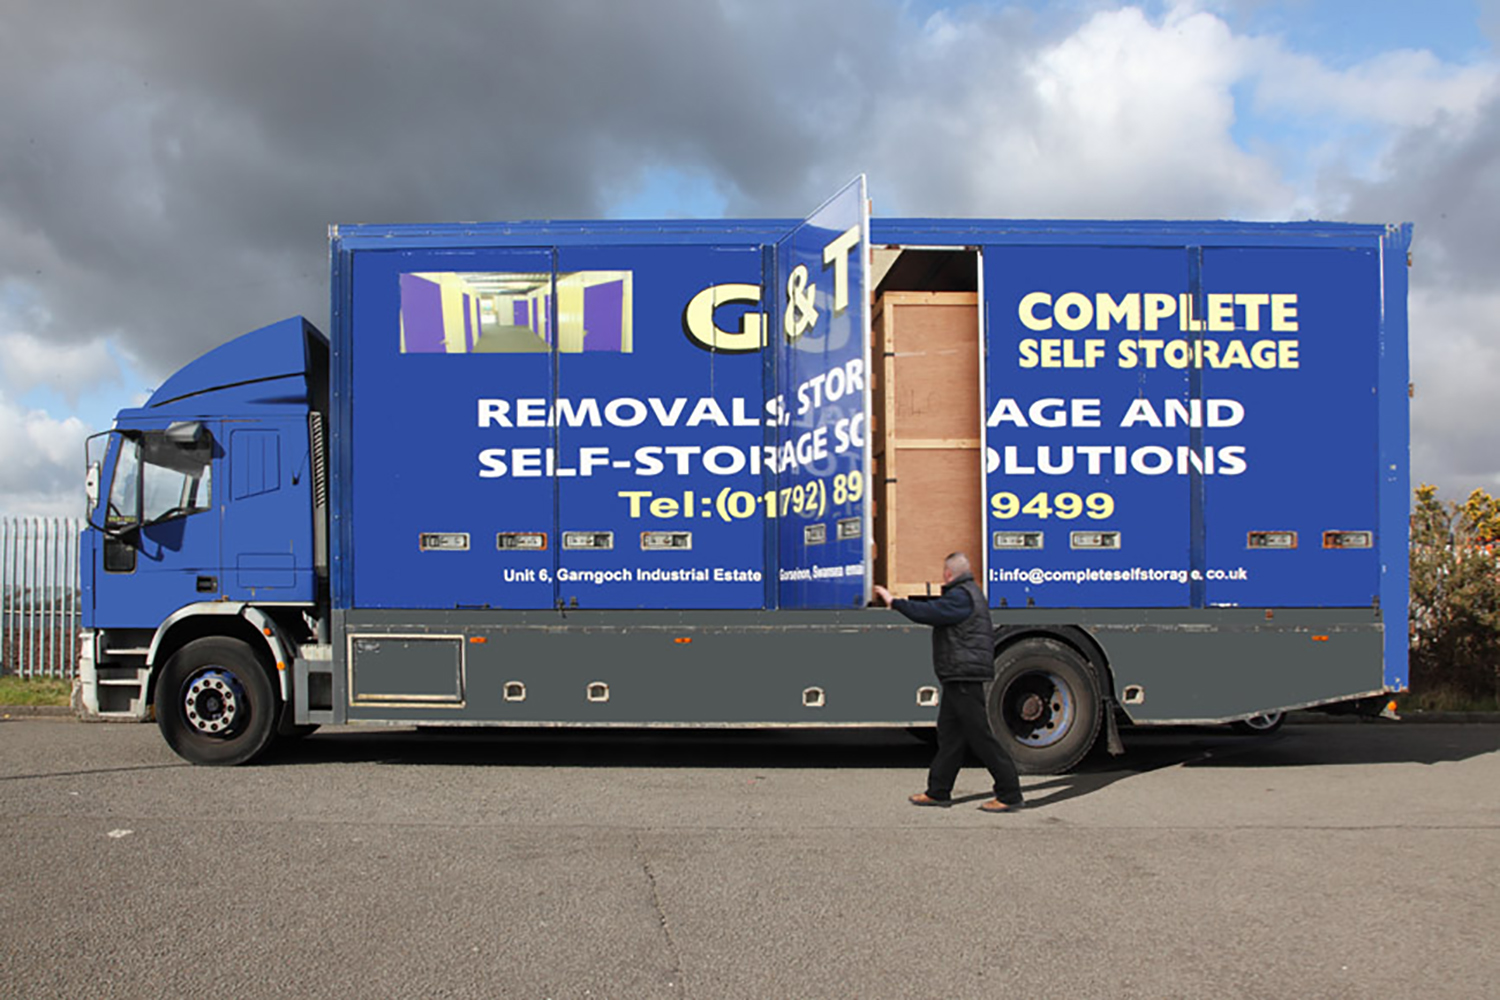 G & T Complete Self Storage, Swansea.